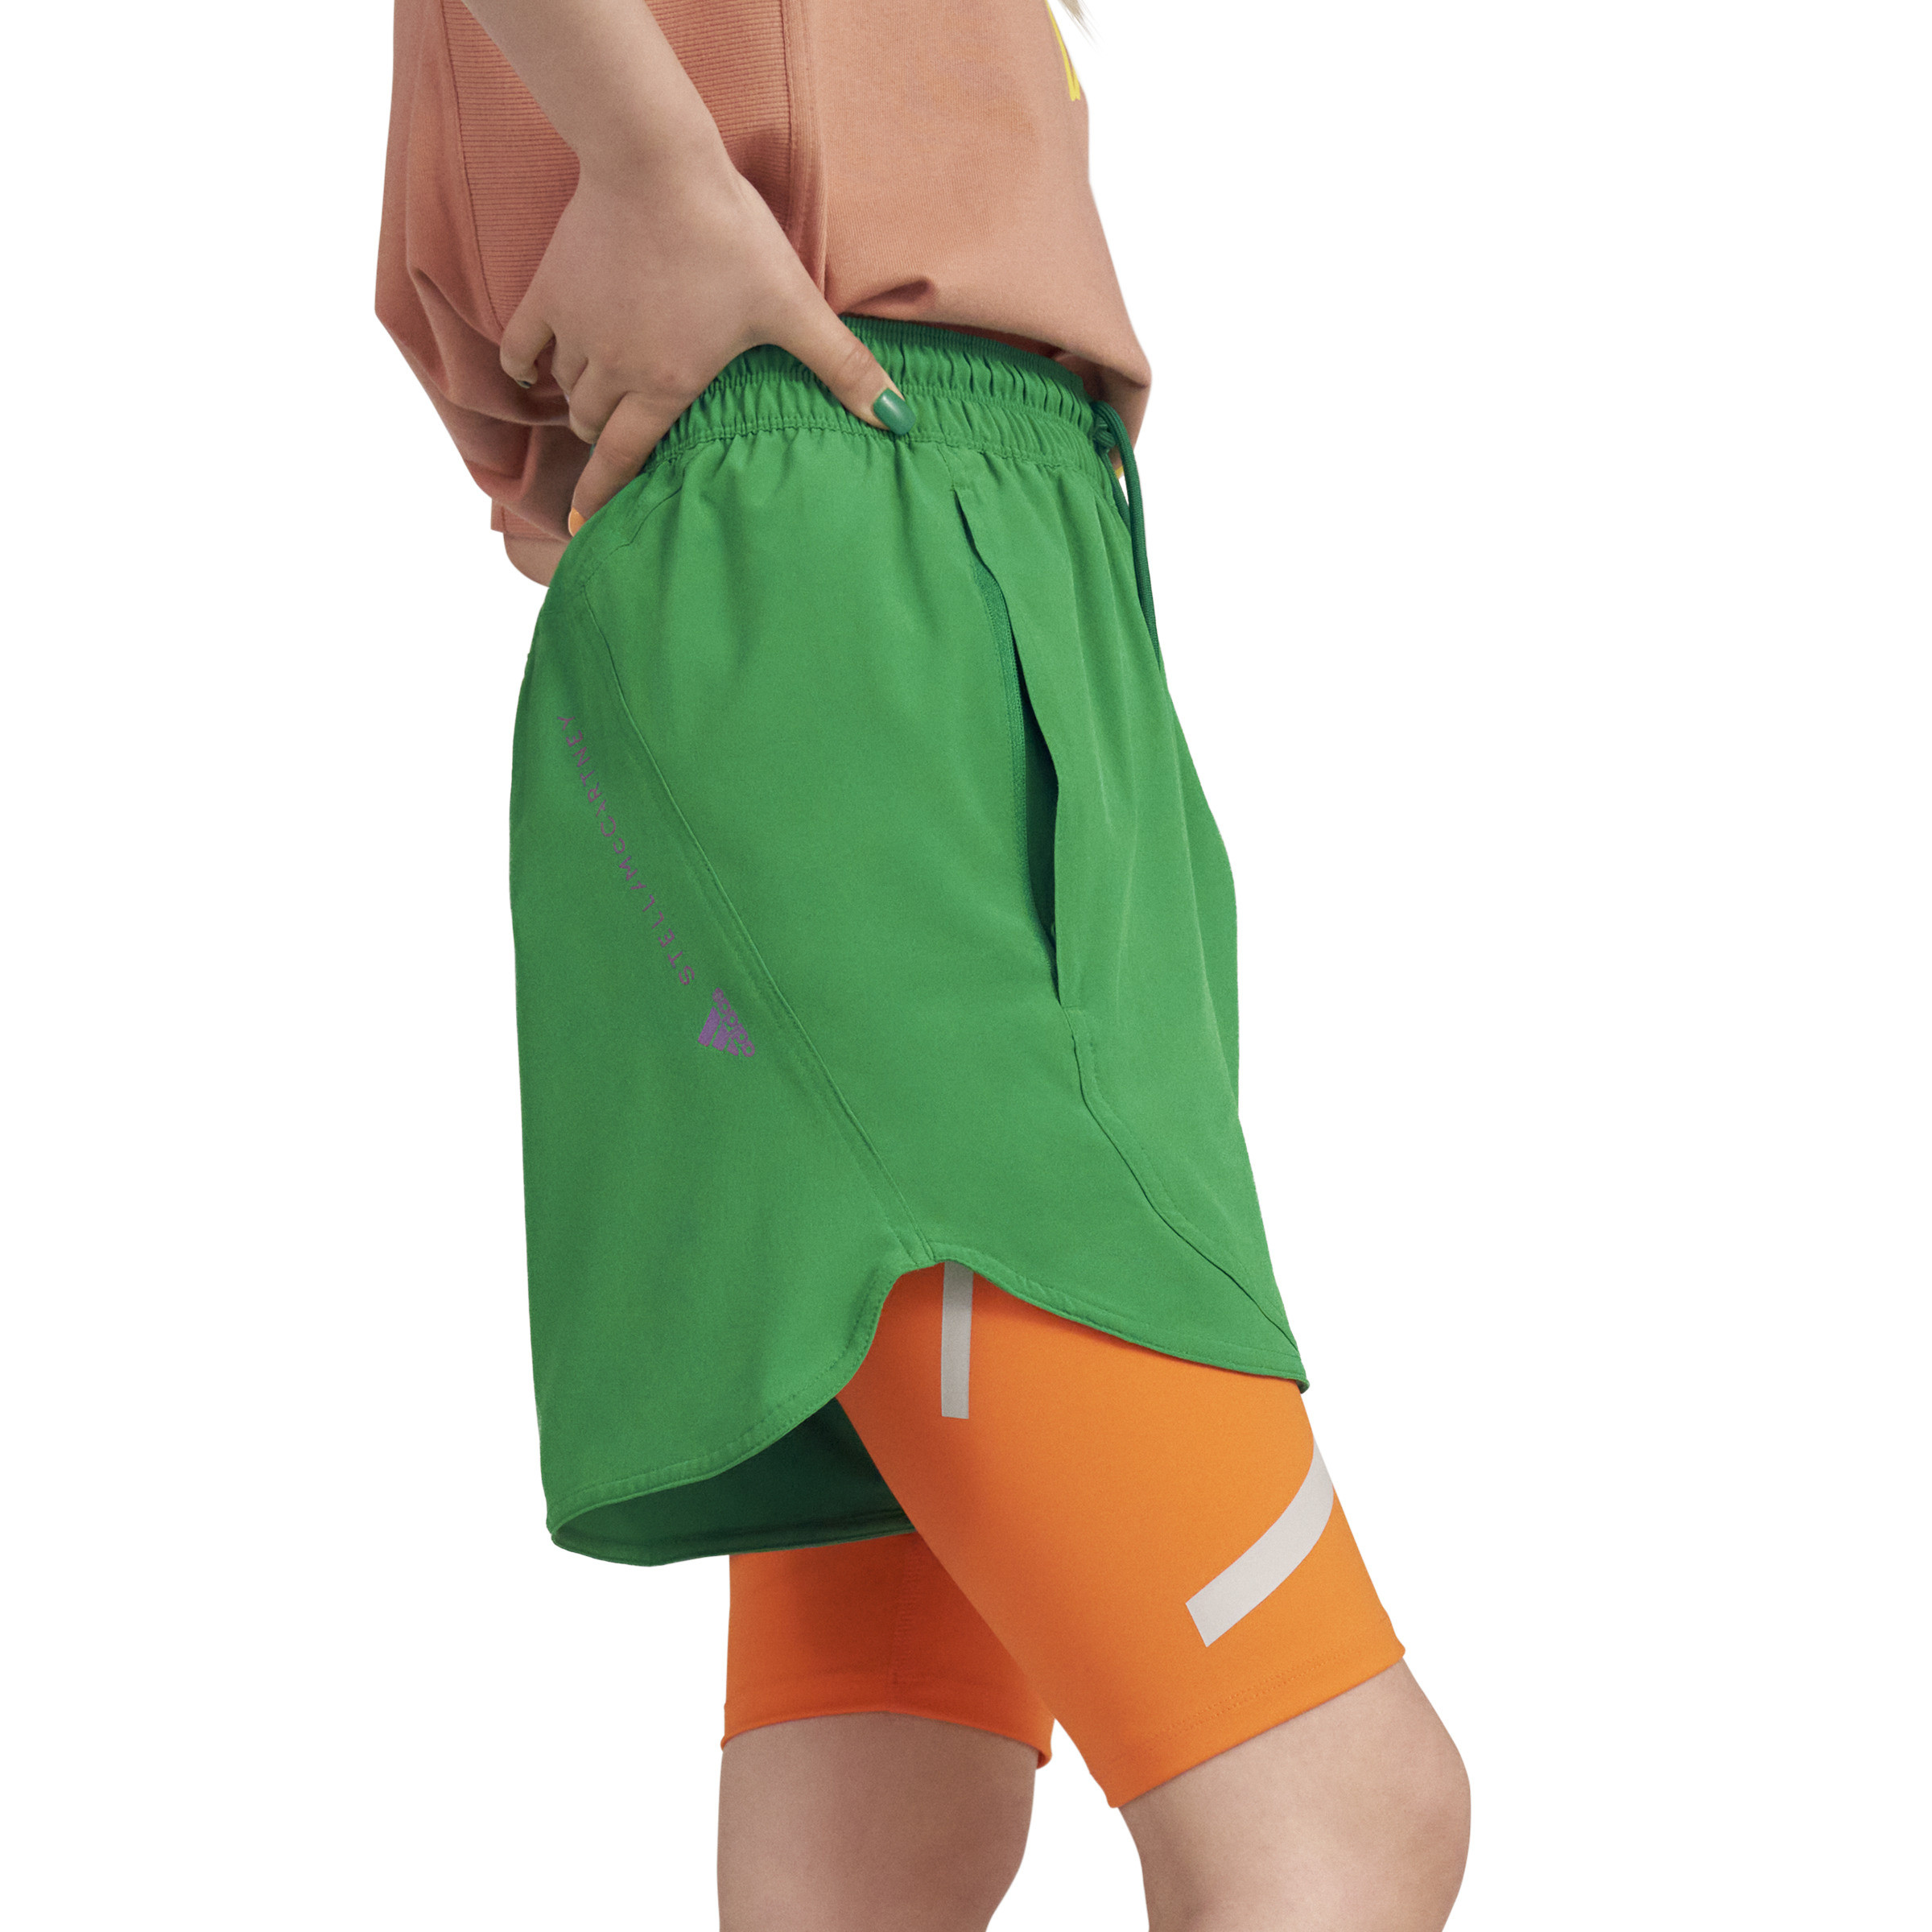 Adidas by Stella McCartney - TruePurpose training shorts, Green, large image number 5